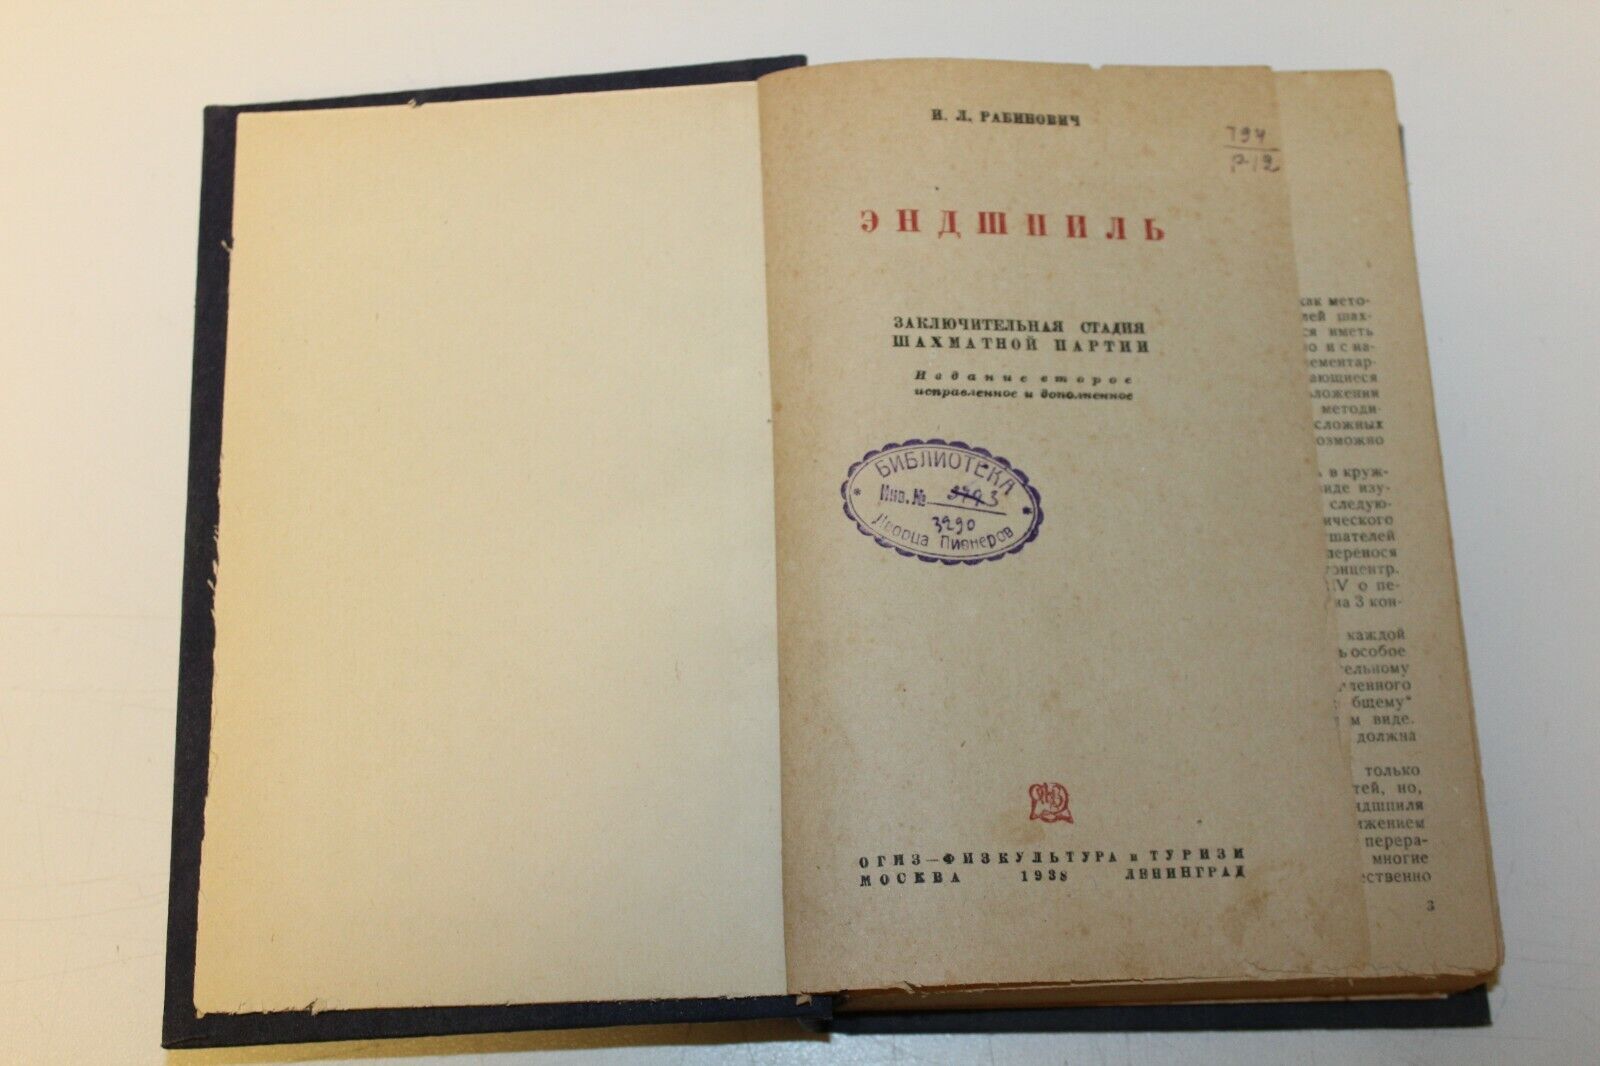 10910.Antique Soviet Chess Book. I. Rabinovich. Endgame.1938